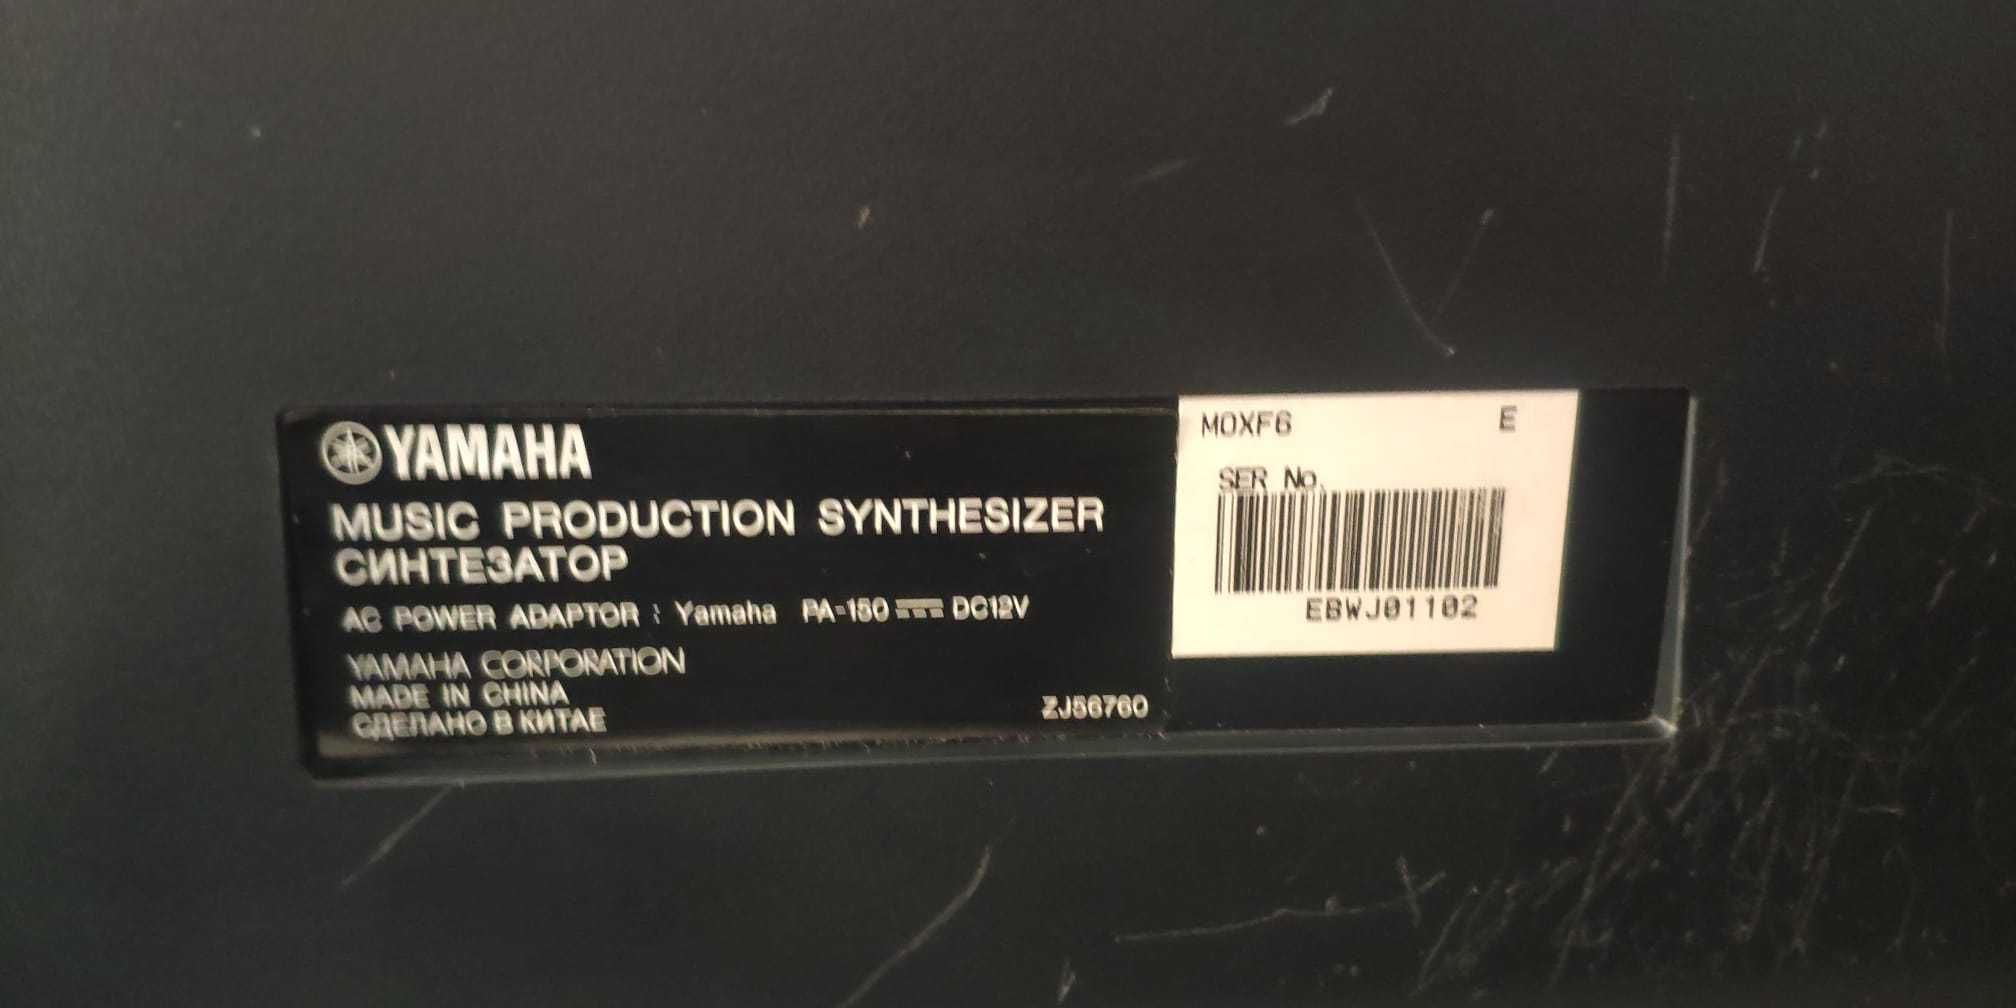 2549 lei OFERTA - Yamaha MOXF6 Workstation Sintetizator